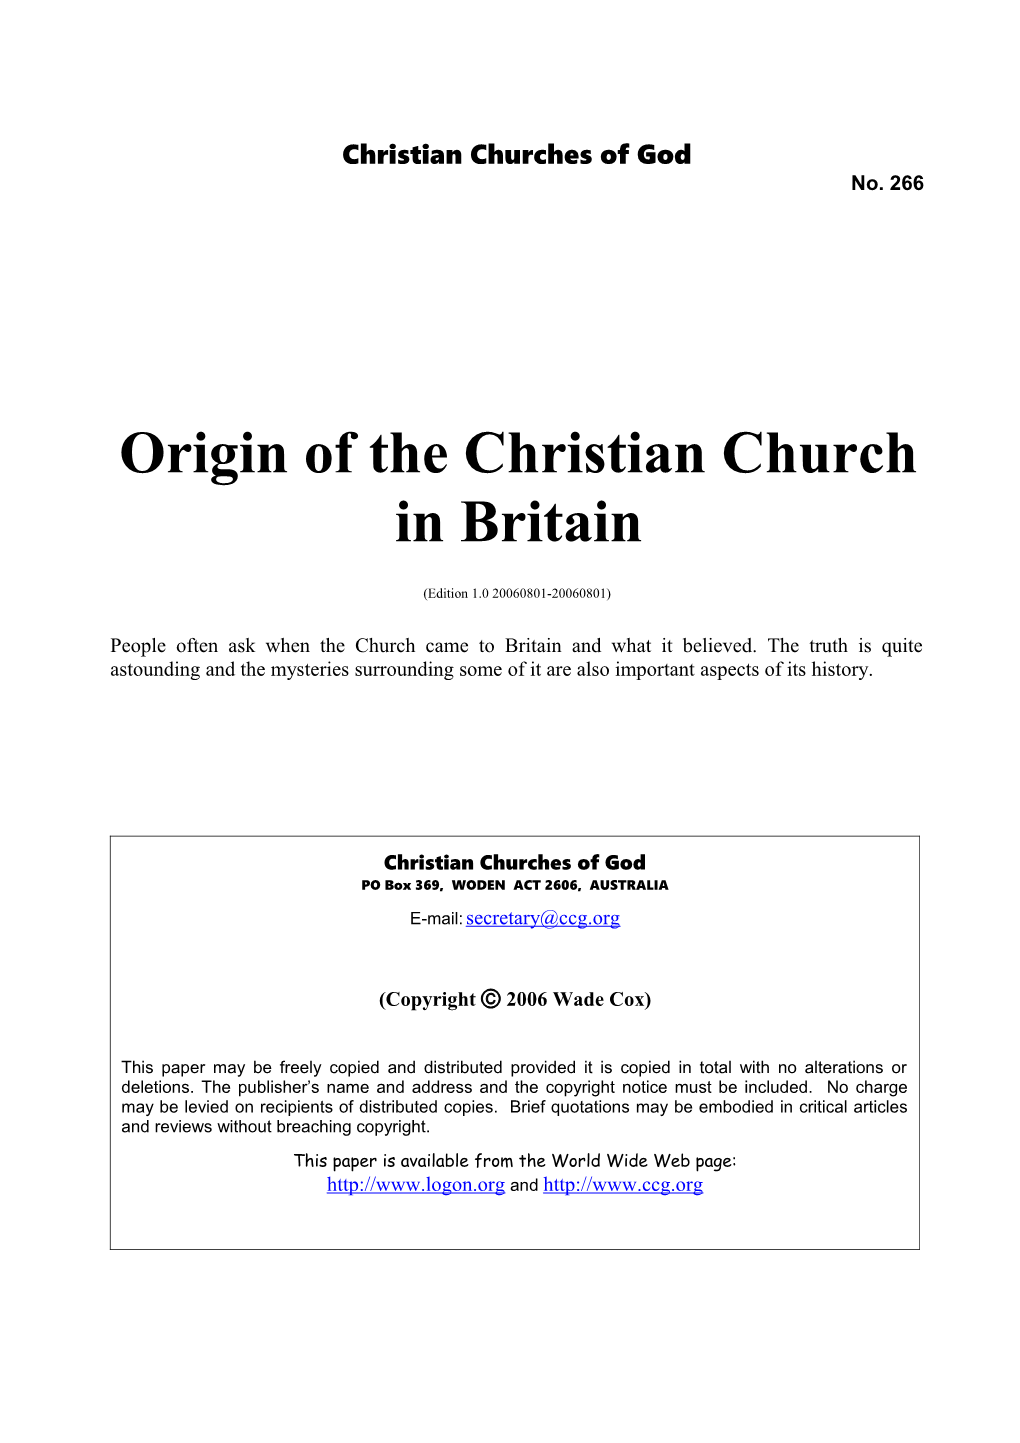 Origin of the Christian Church in Britain (No. 266)